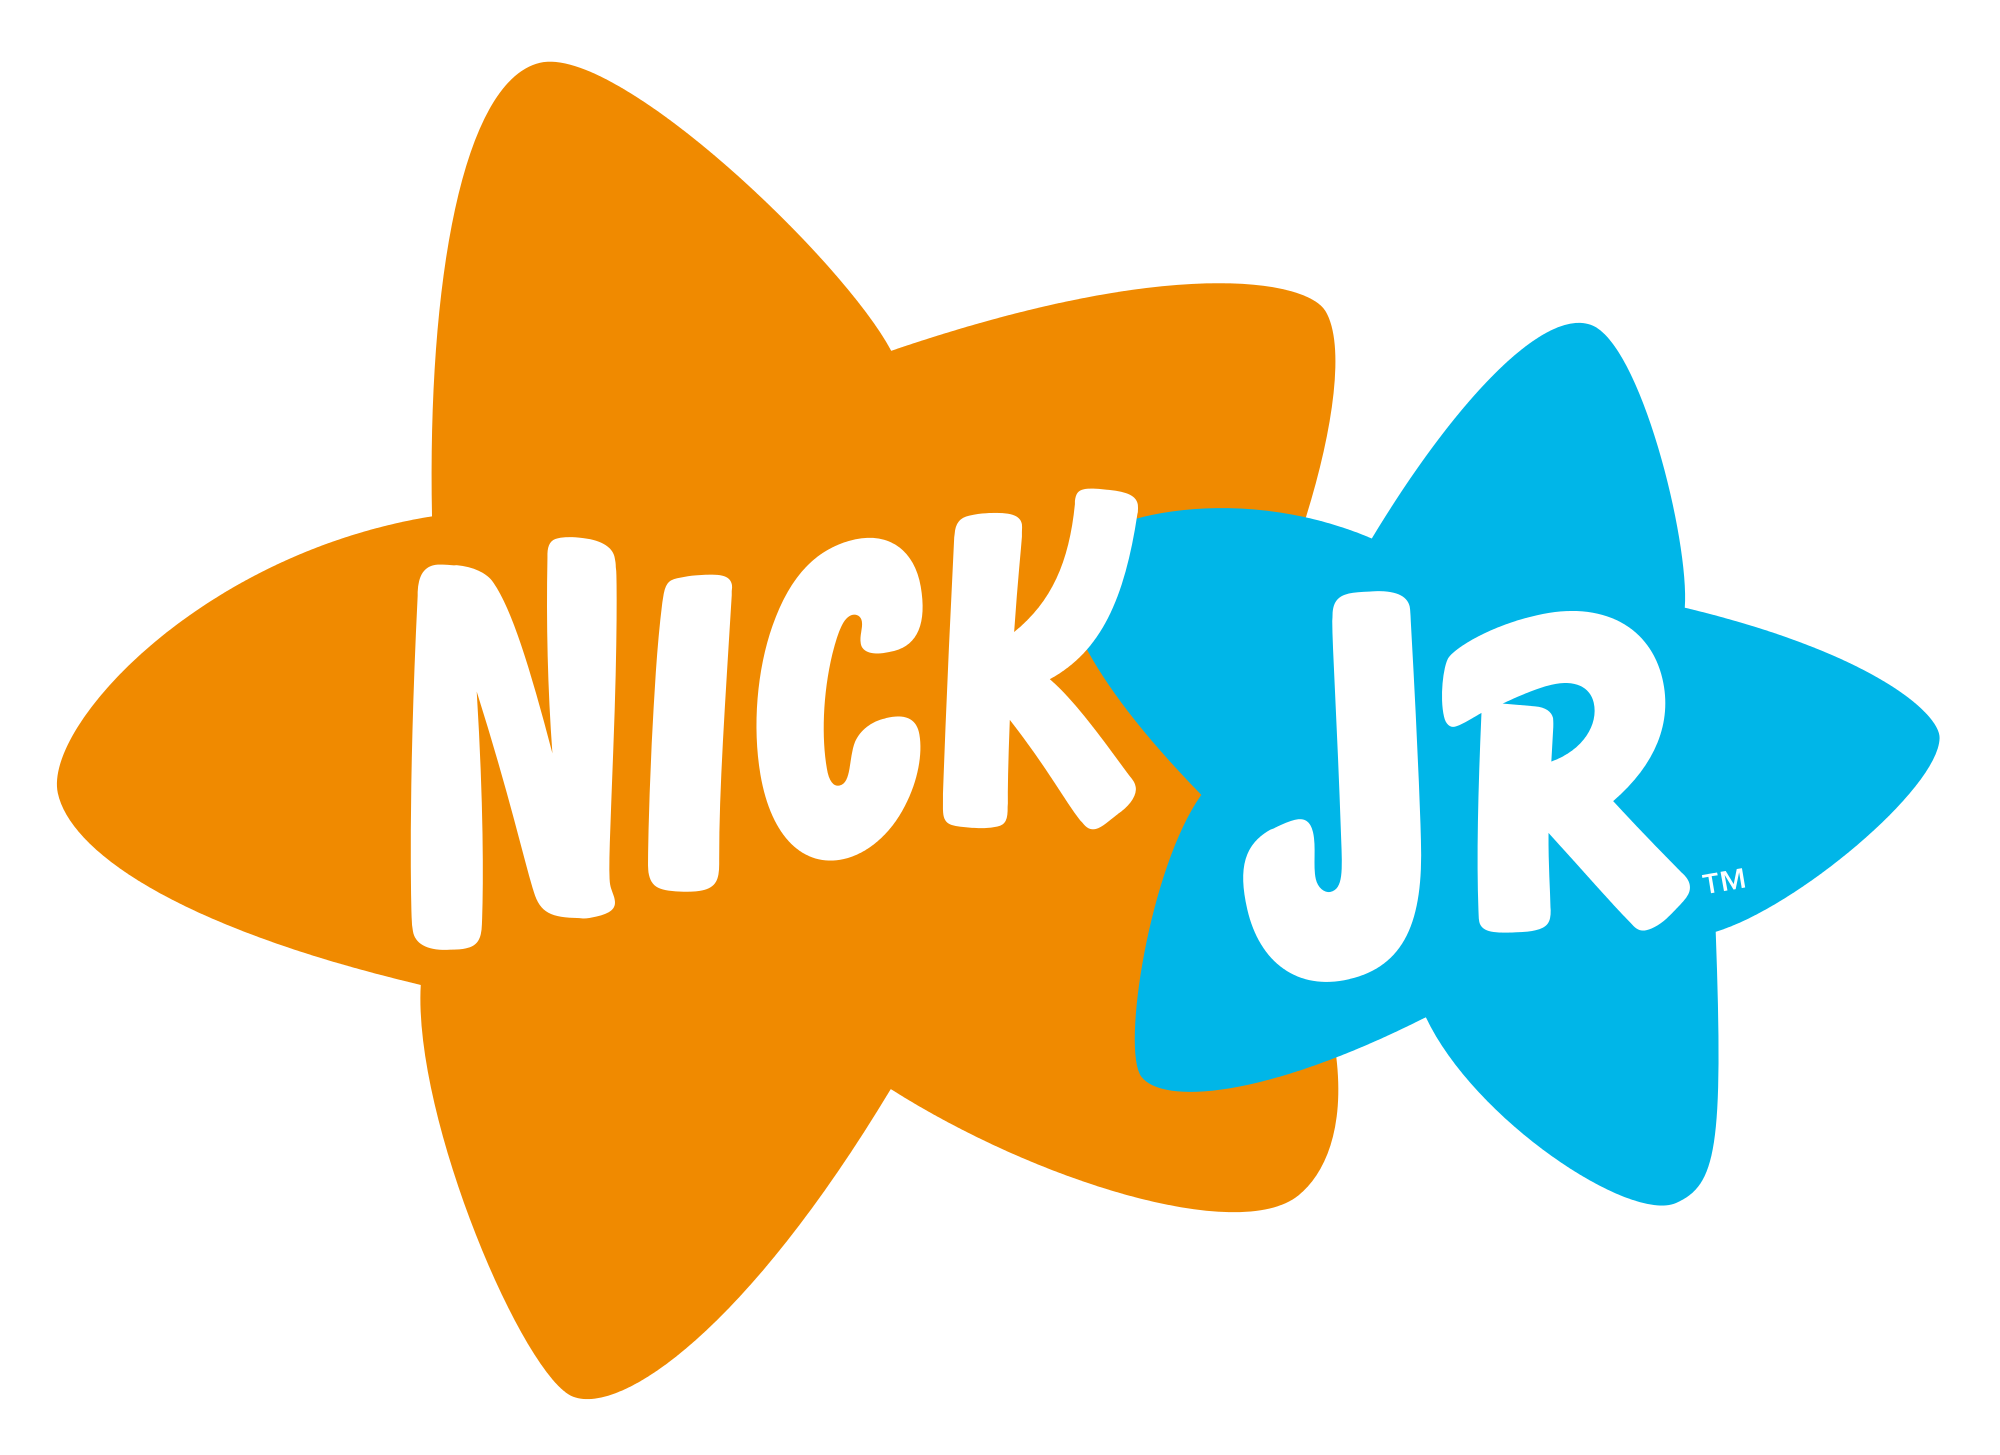 Nick jr productions logo. Parachute clipart egg experiment